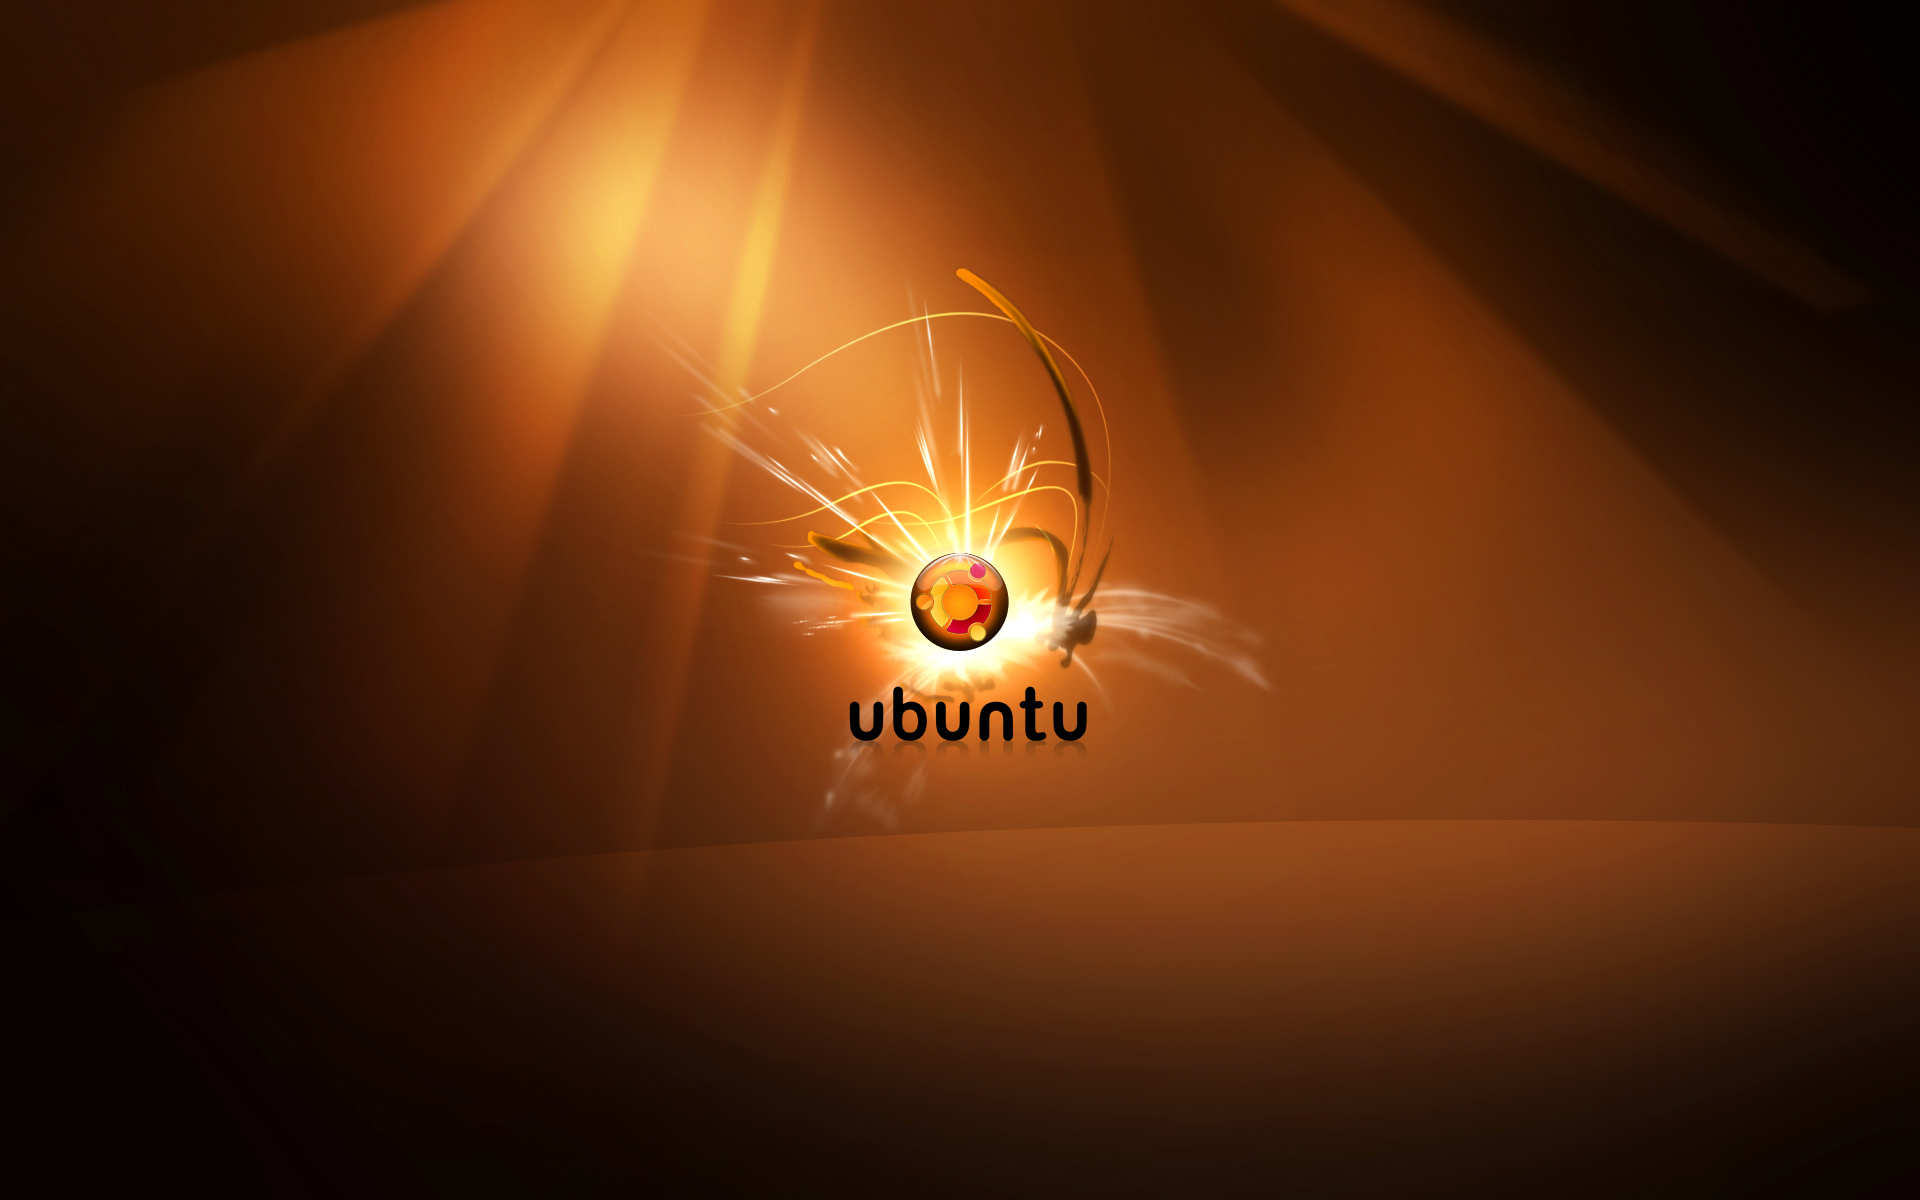 Best Looking Wallpaper For Ubuntu